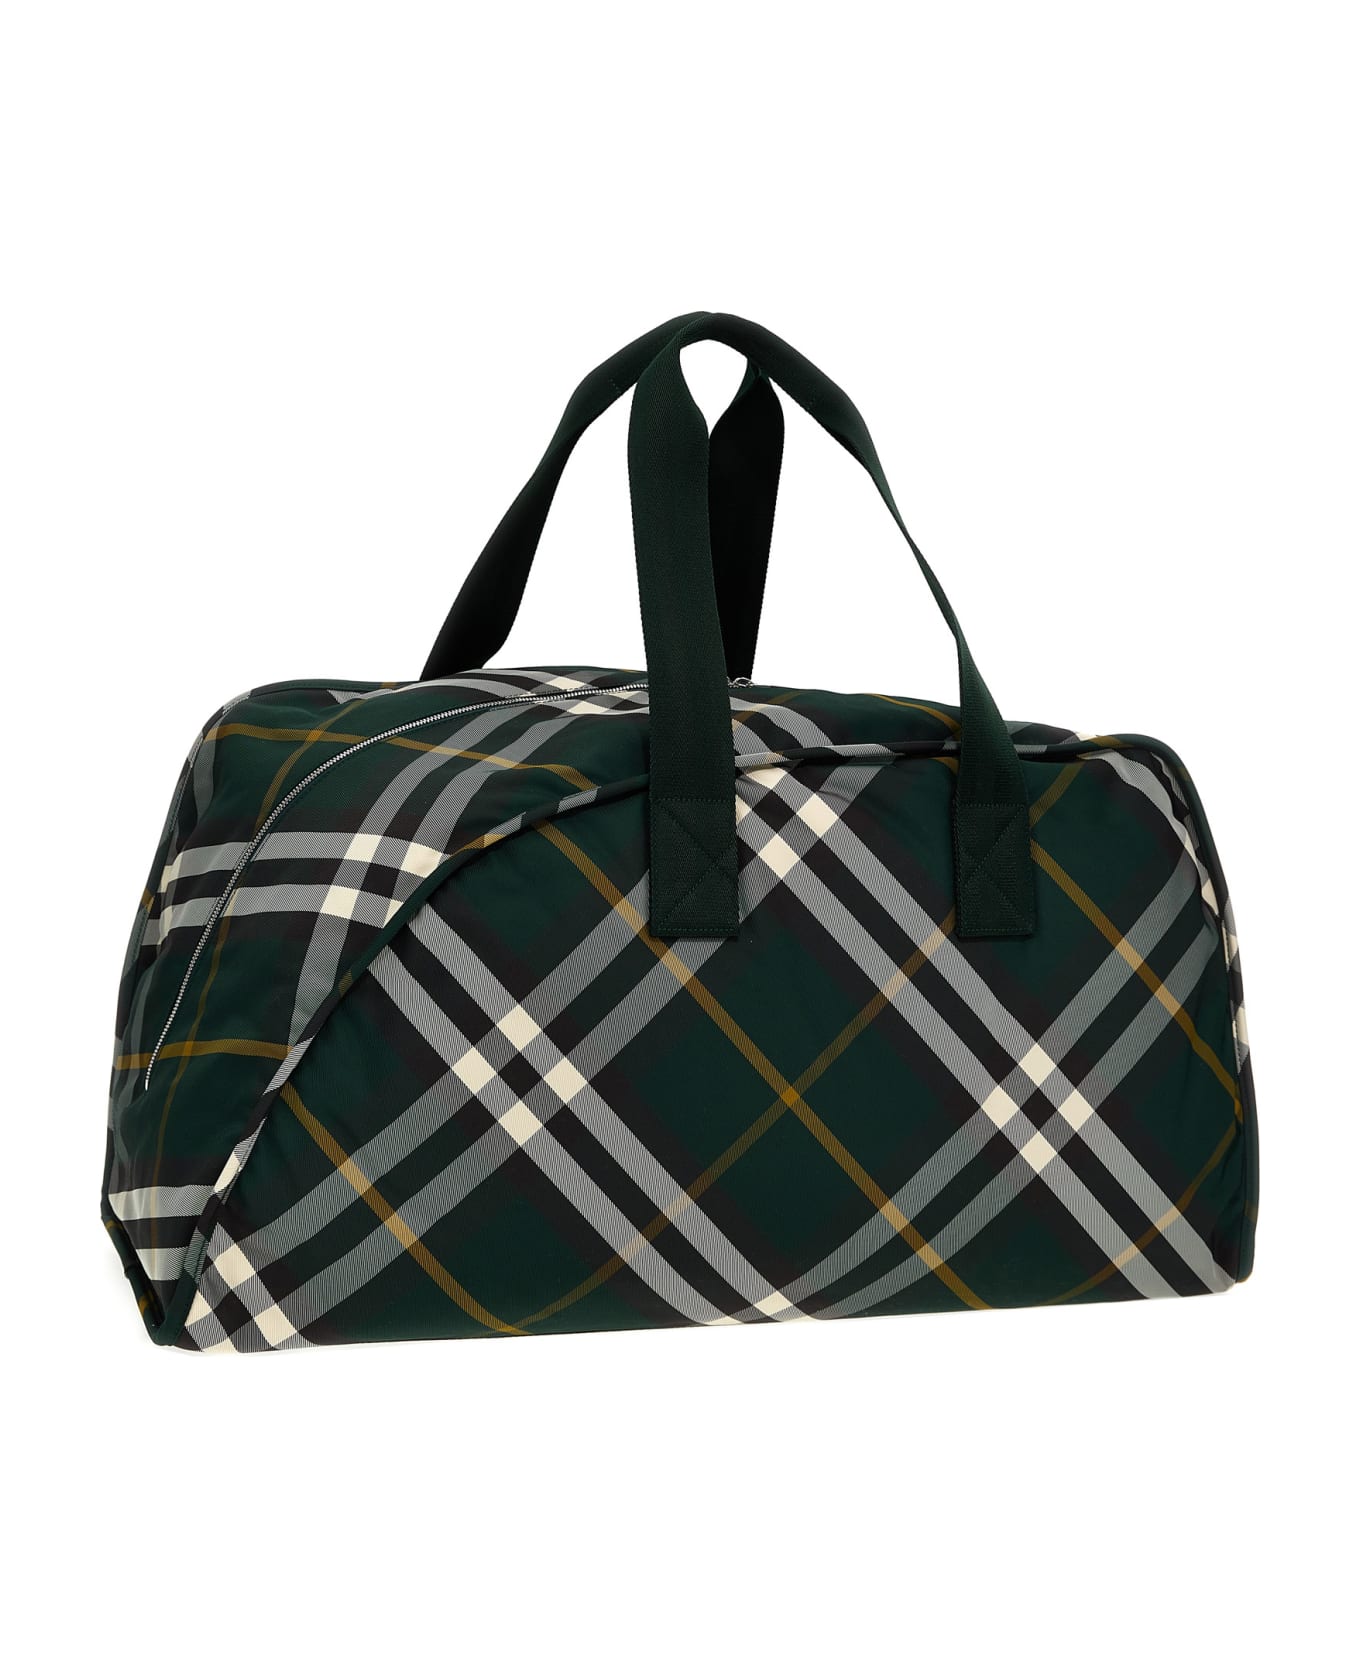 Burberry 'shield' Large Travel Bag - Green アクセサリー